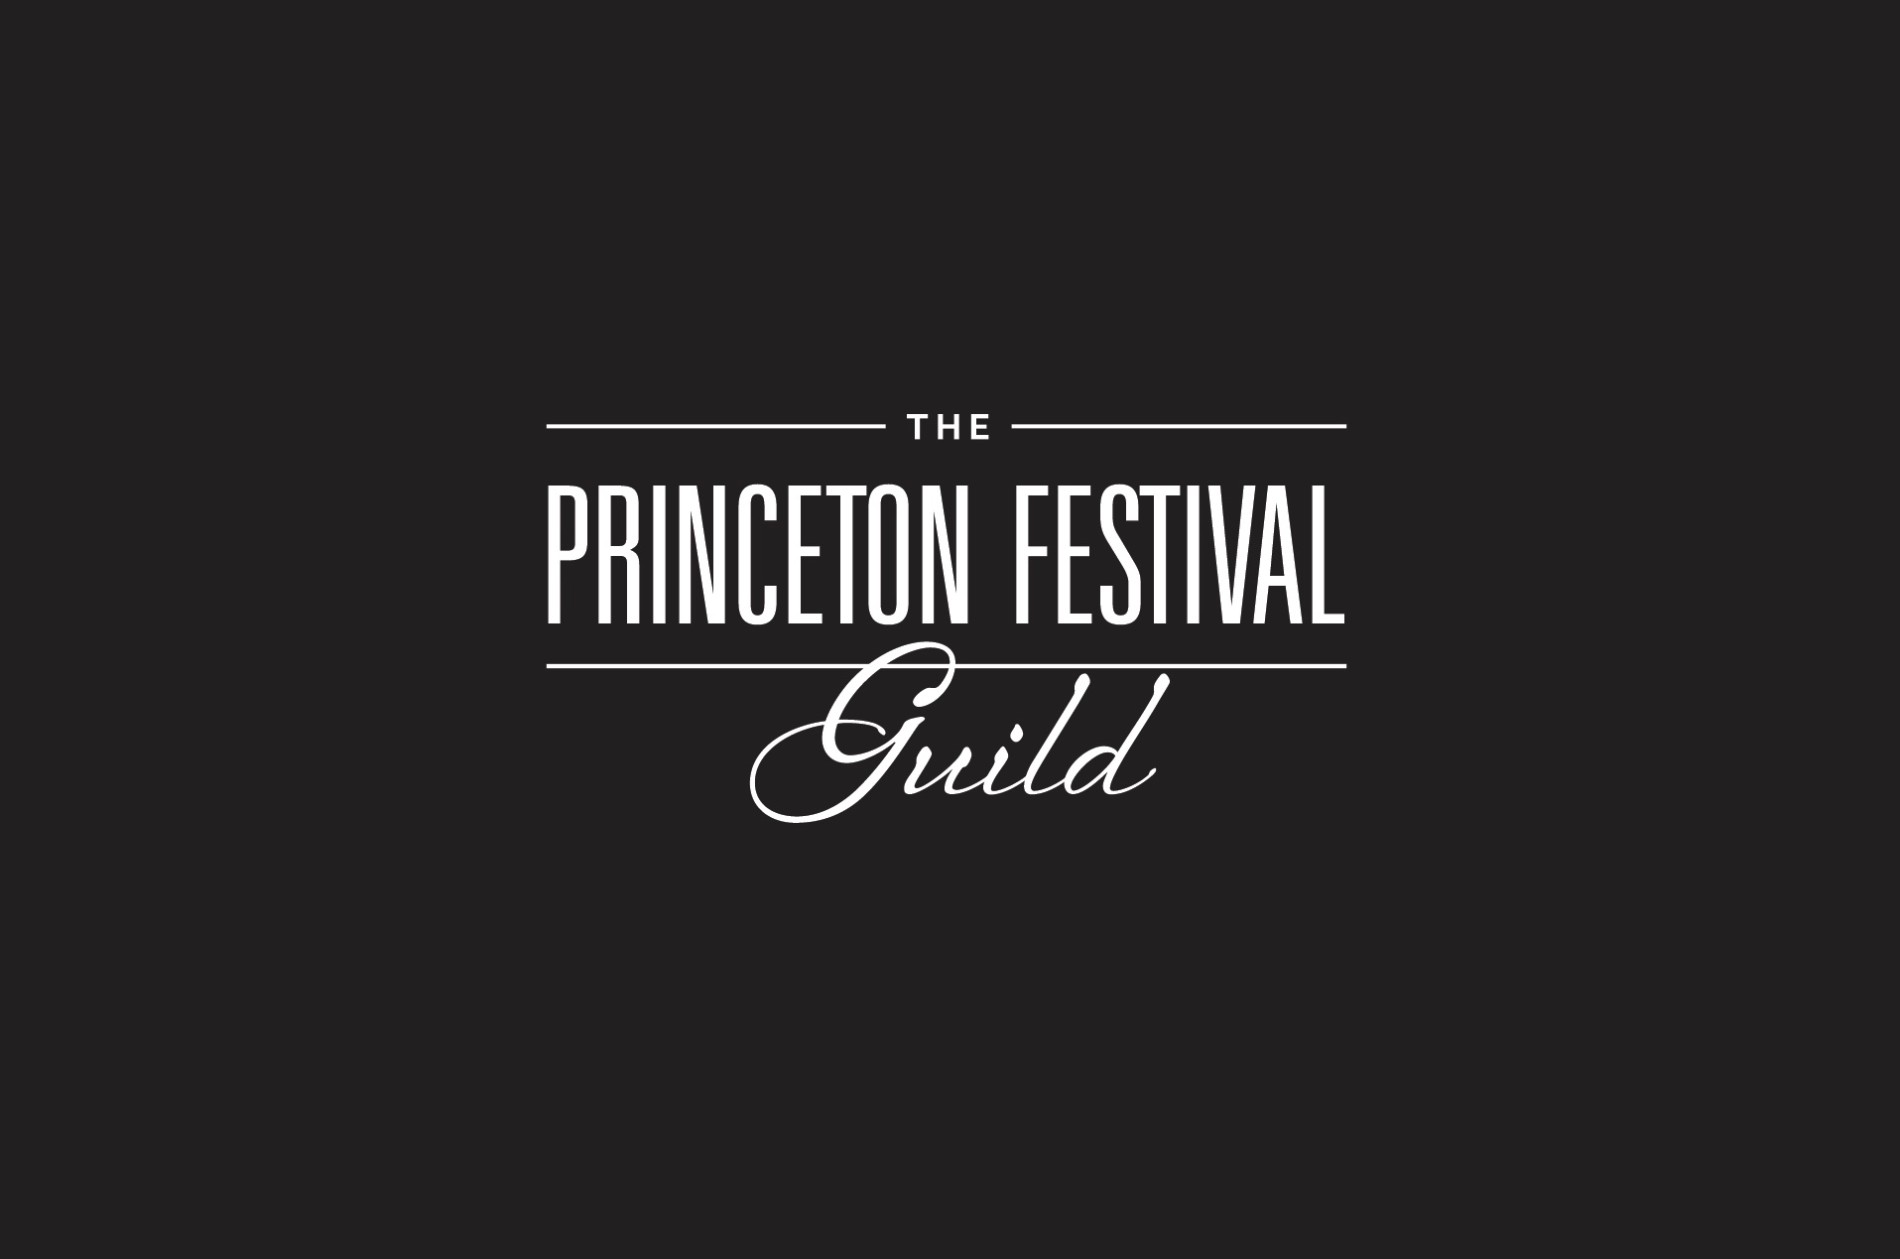 The Princeton Festival Guild